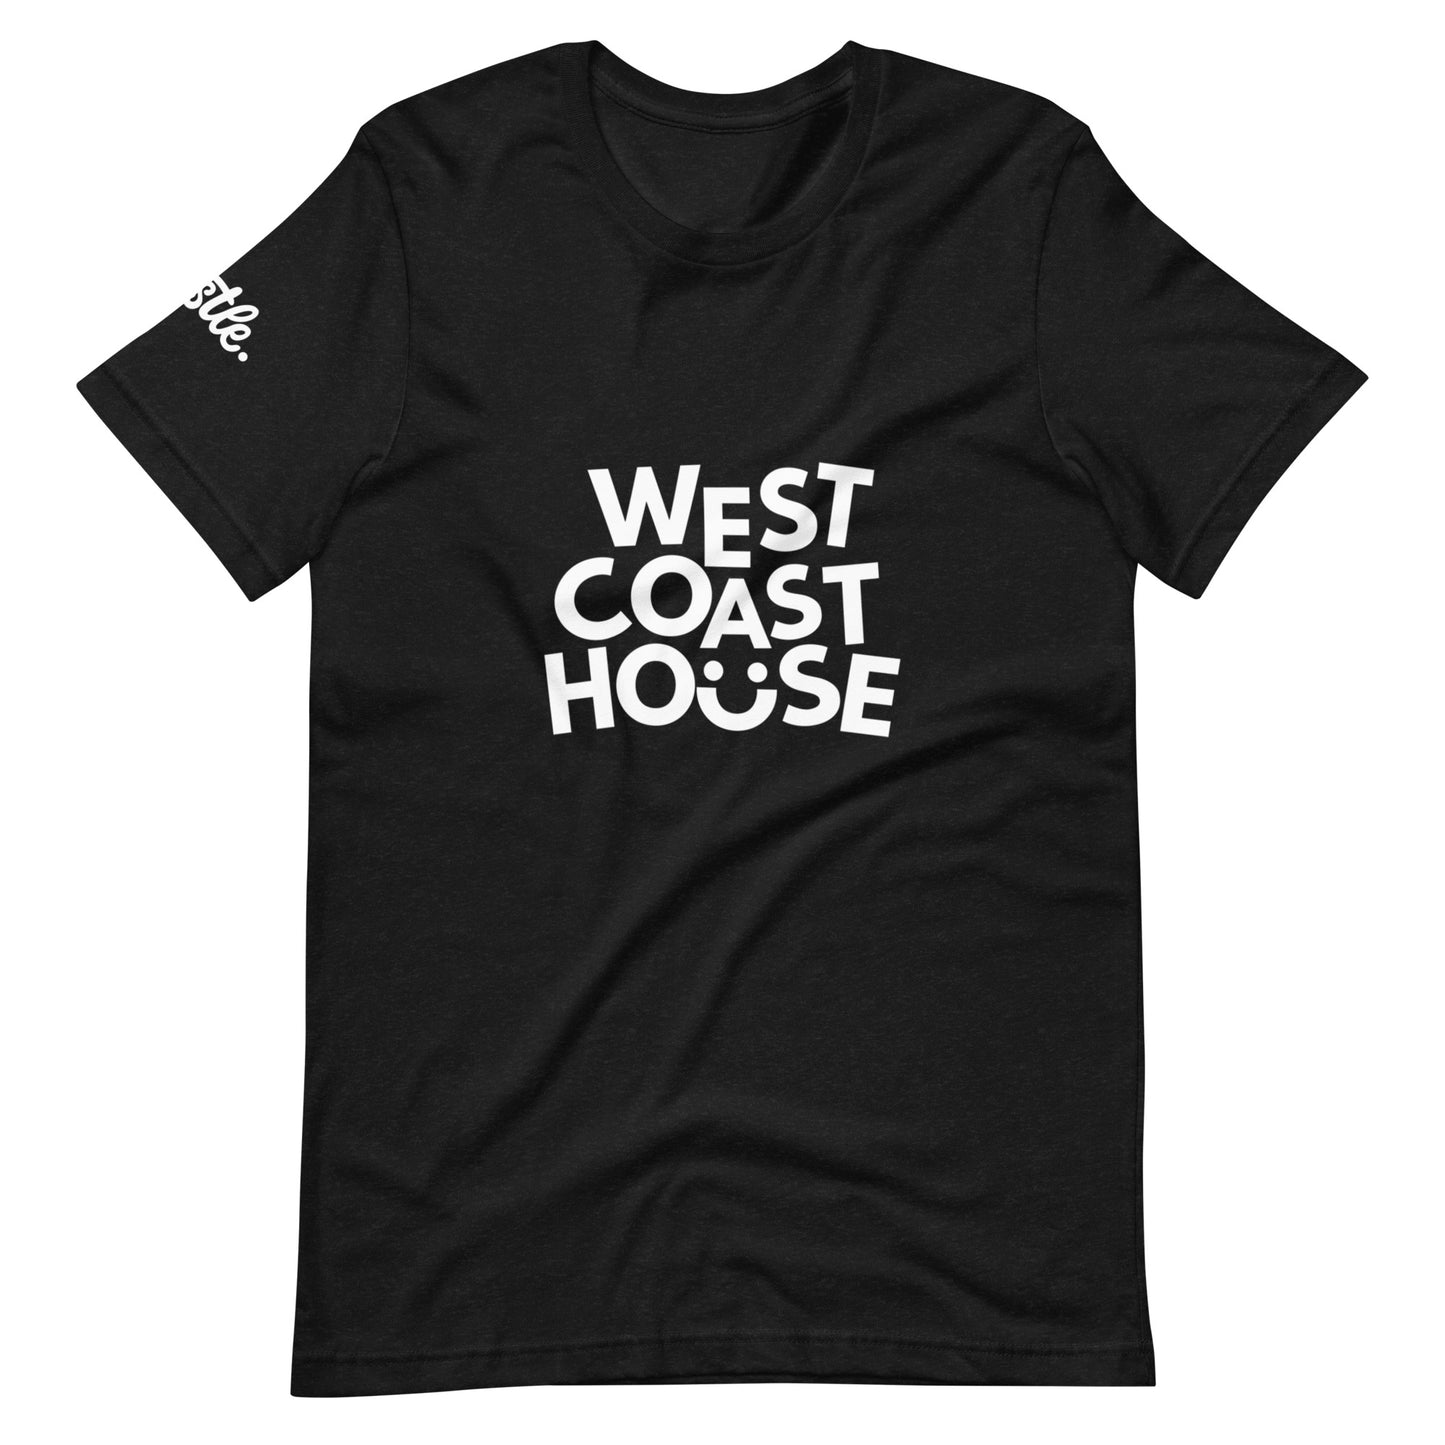 West Coast House Tee